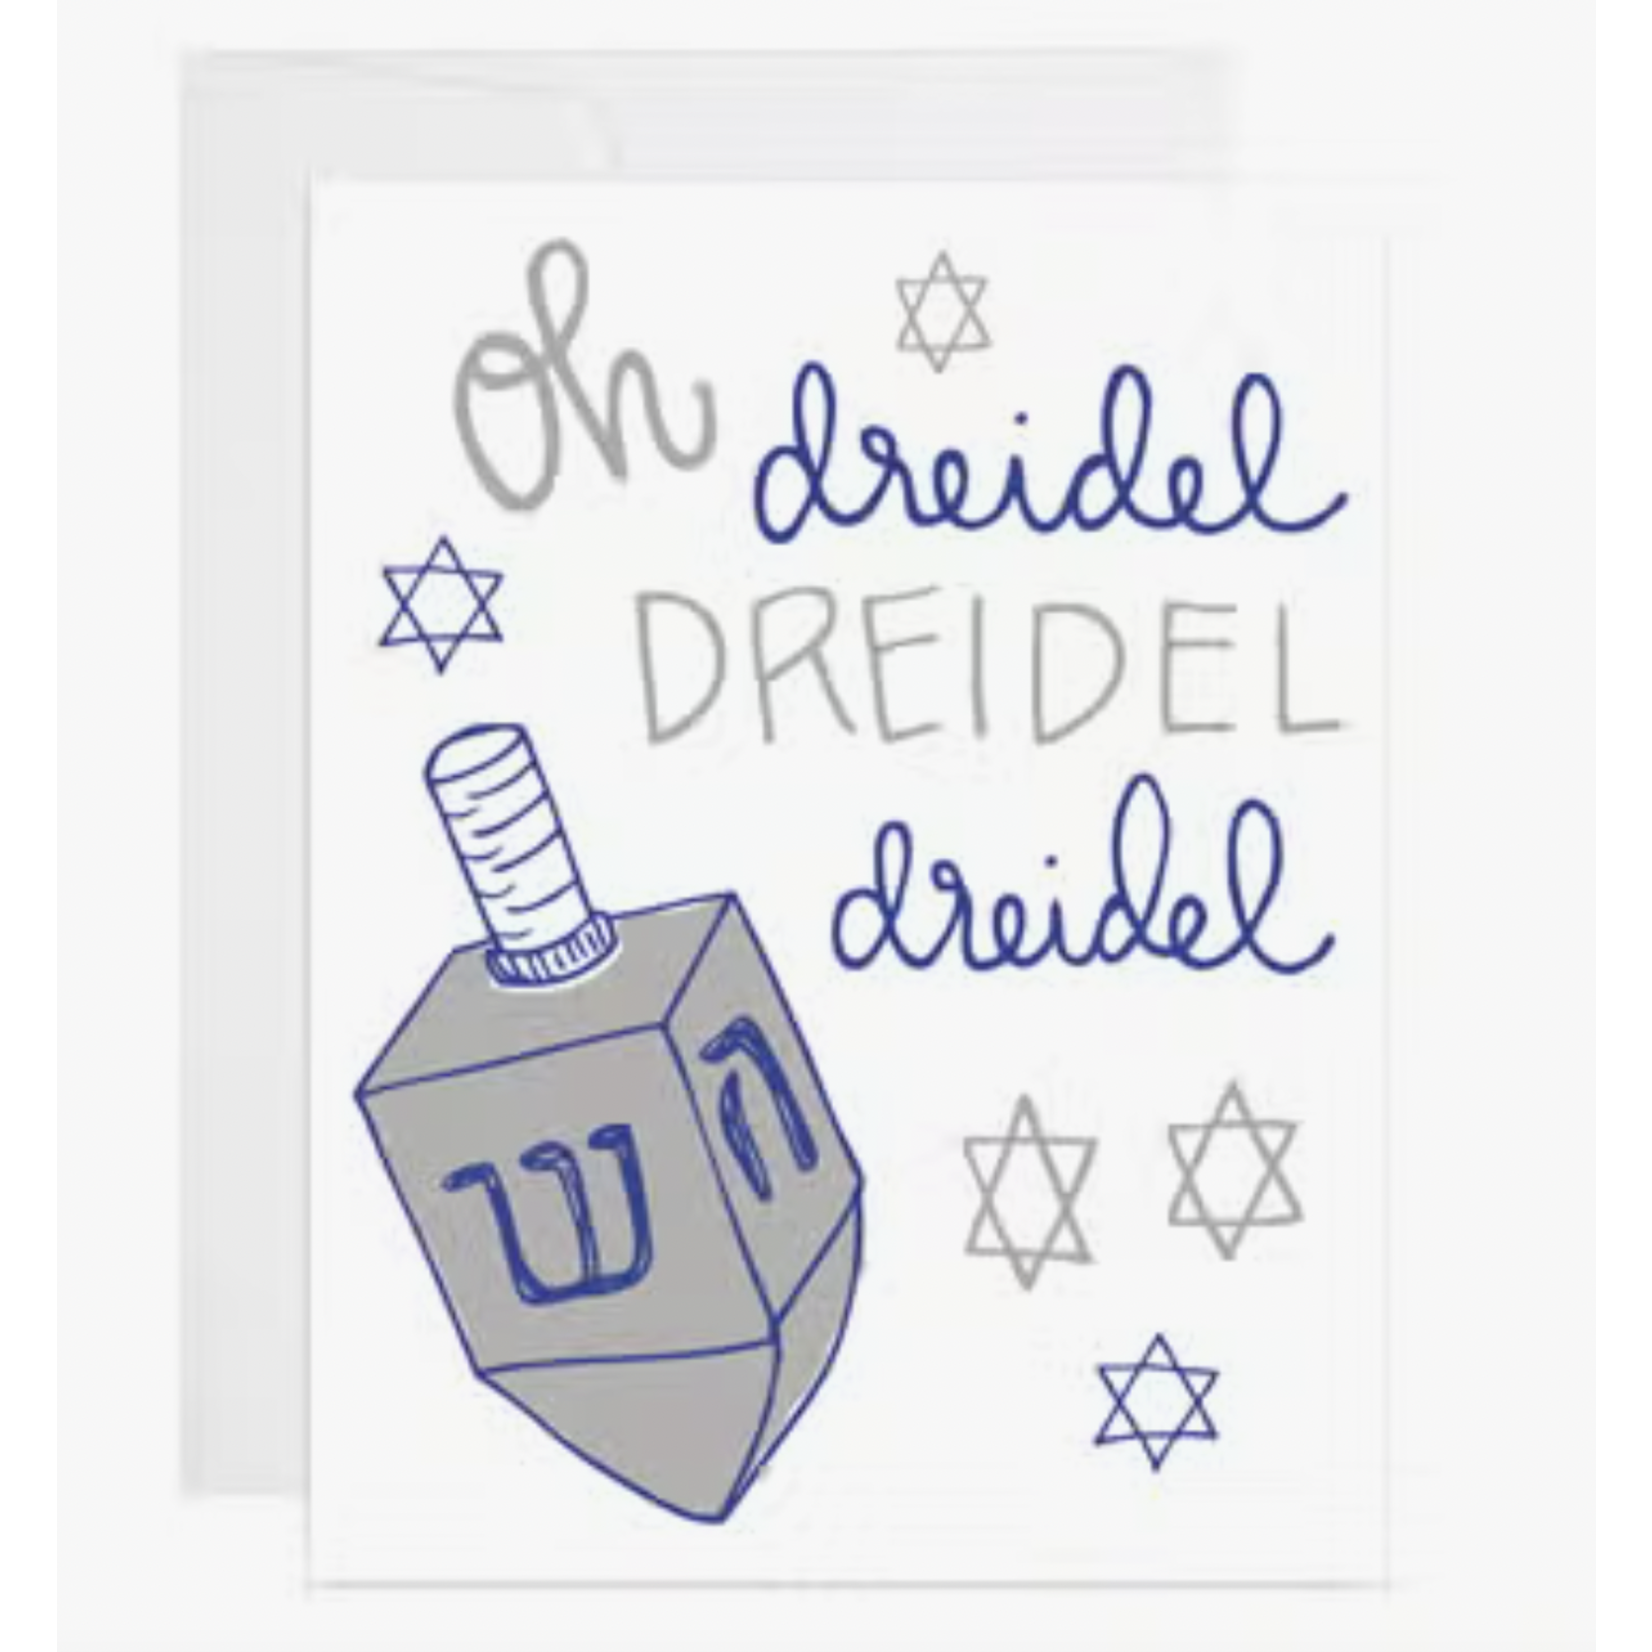 9th Letterpress Dreidel Dreidel